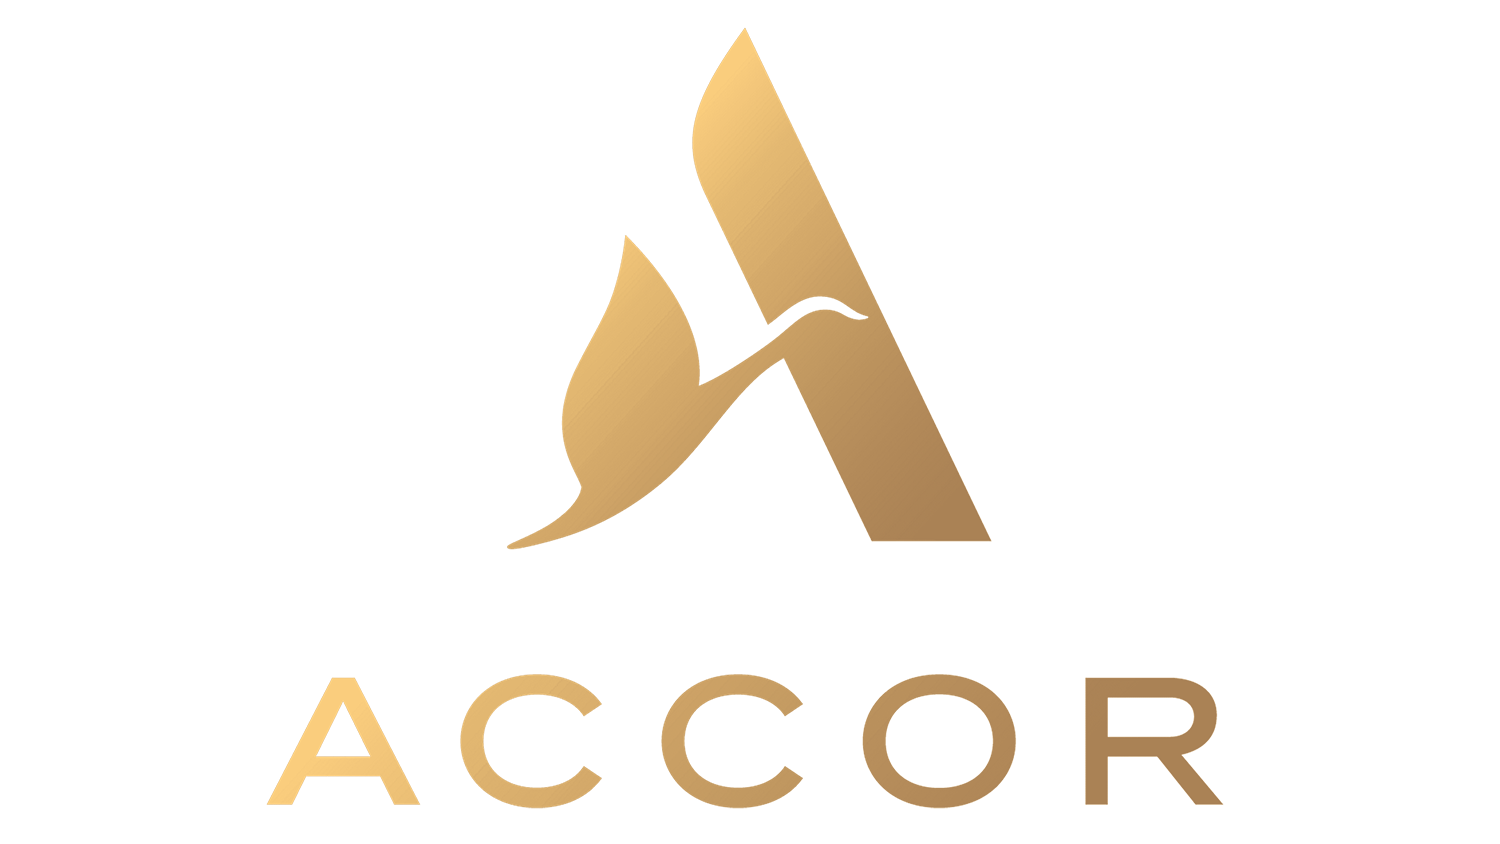 Accor gold logo (2)